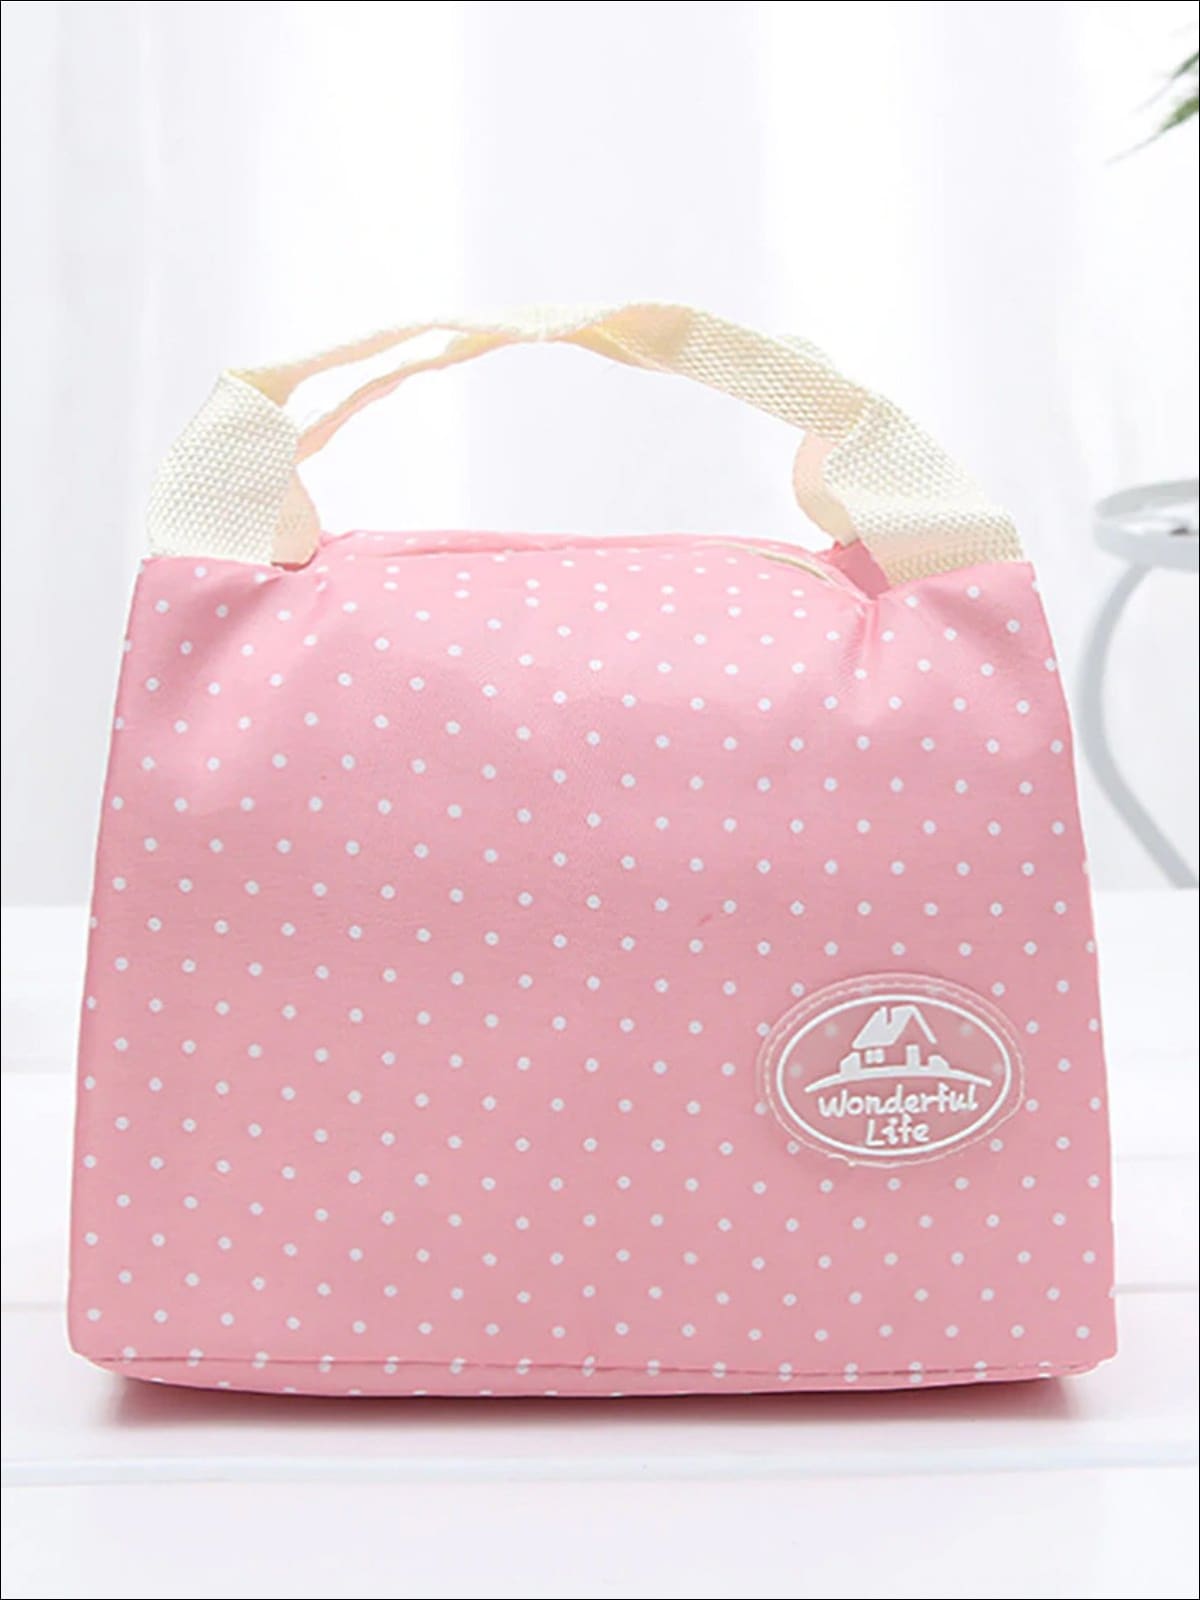 Josfey Kawaii Lunch Bag Cute Lunch Box Aesthetic Lunch Bag Insulated Lunch Bag Women Lunch Box Lunch Bag for Women (Pink-Square)